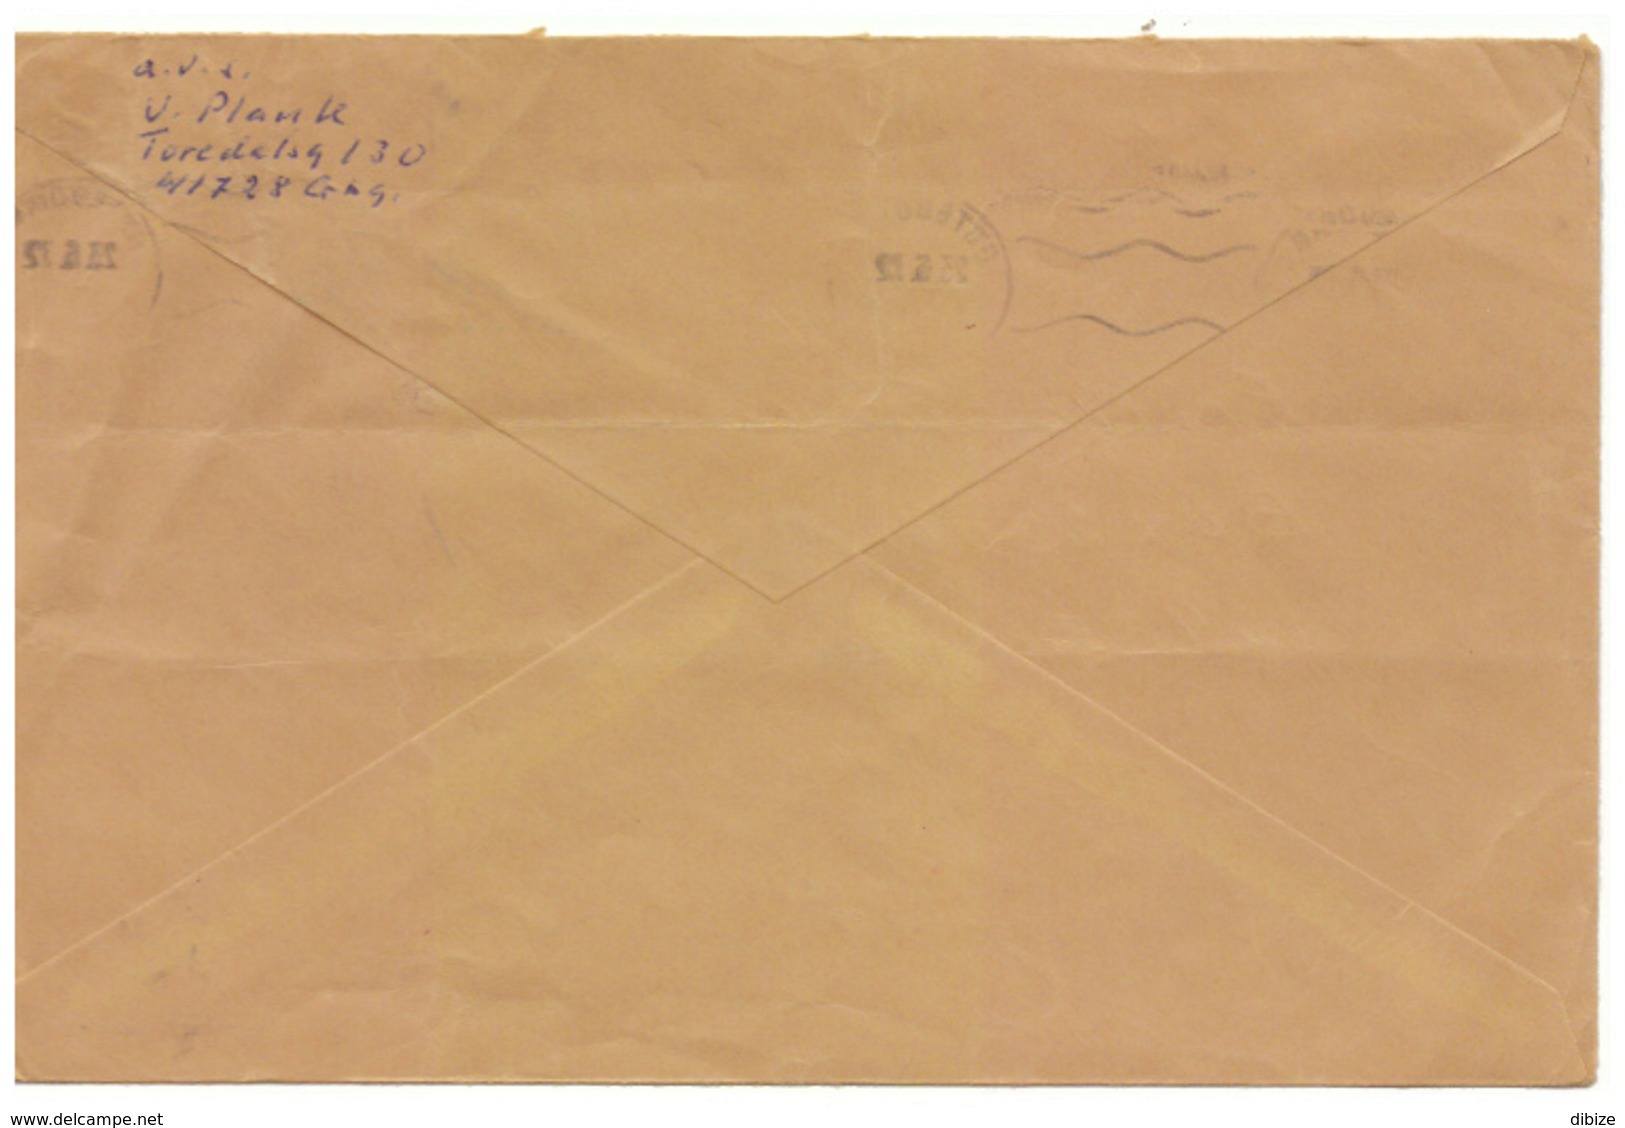 Sweden. Letter. Stamps And Postmark. 1972. Goteborg - 1930- ... Coil Stamps II